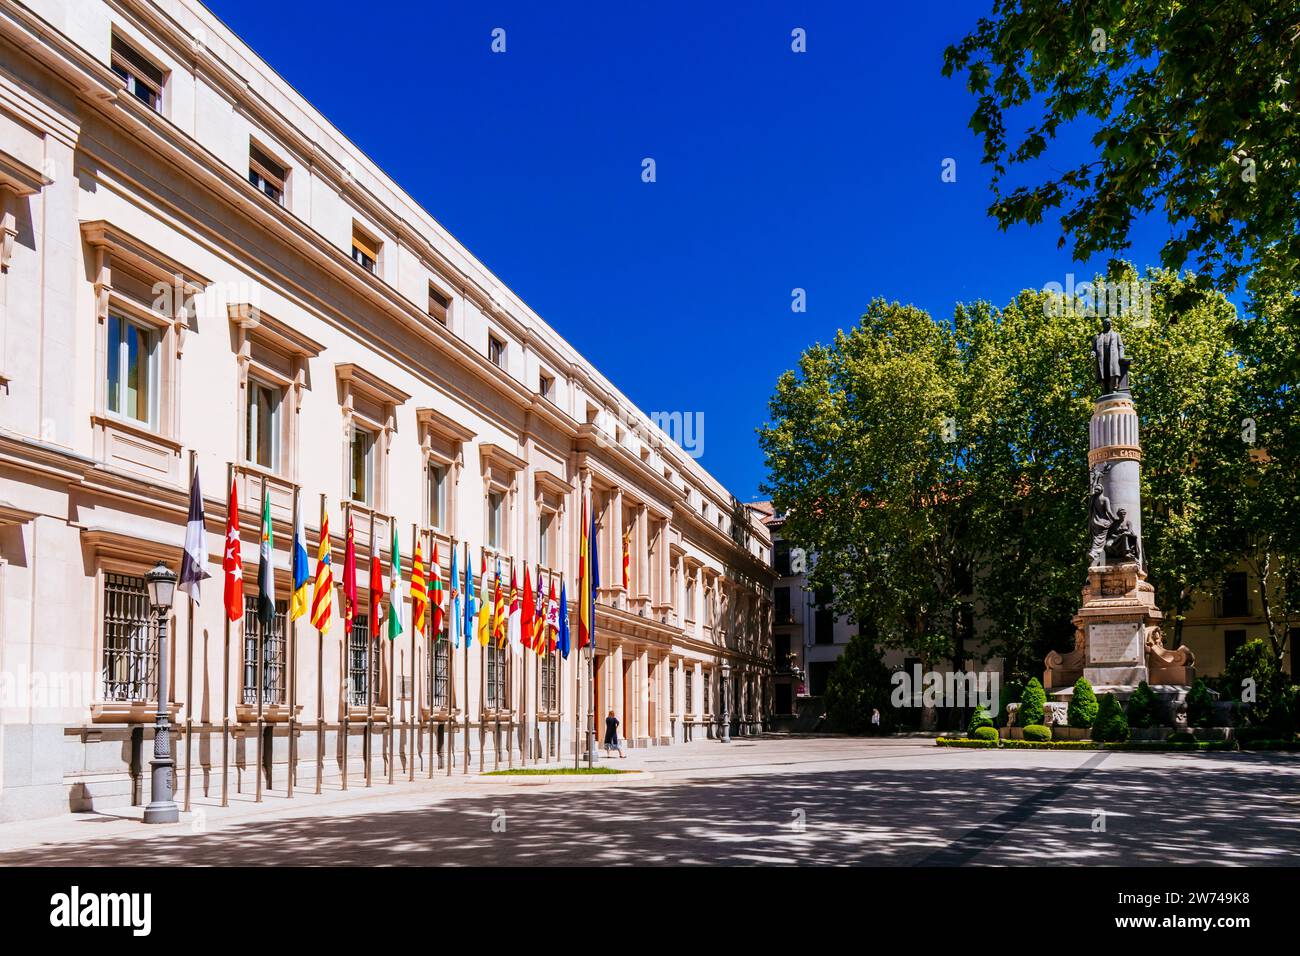 Palacio del Senado - Palast des Senats ist Sitz des spanischen Senats, Oberhaus der Cortes Generales, des nationalen parlaments von Spai Stockfoto